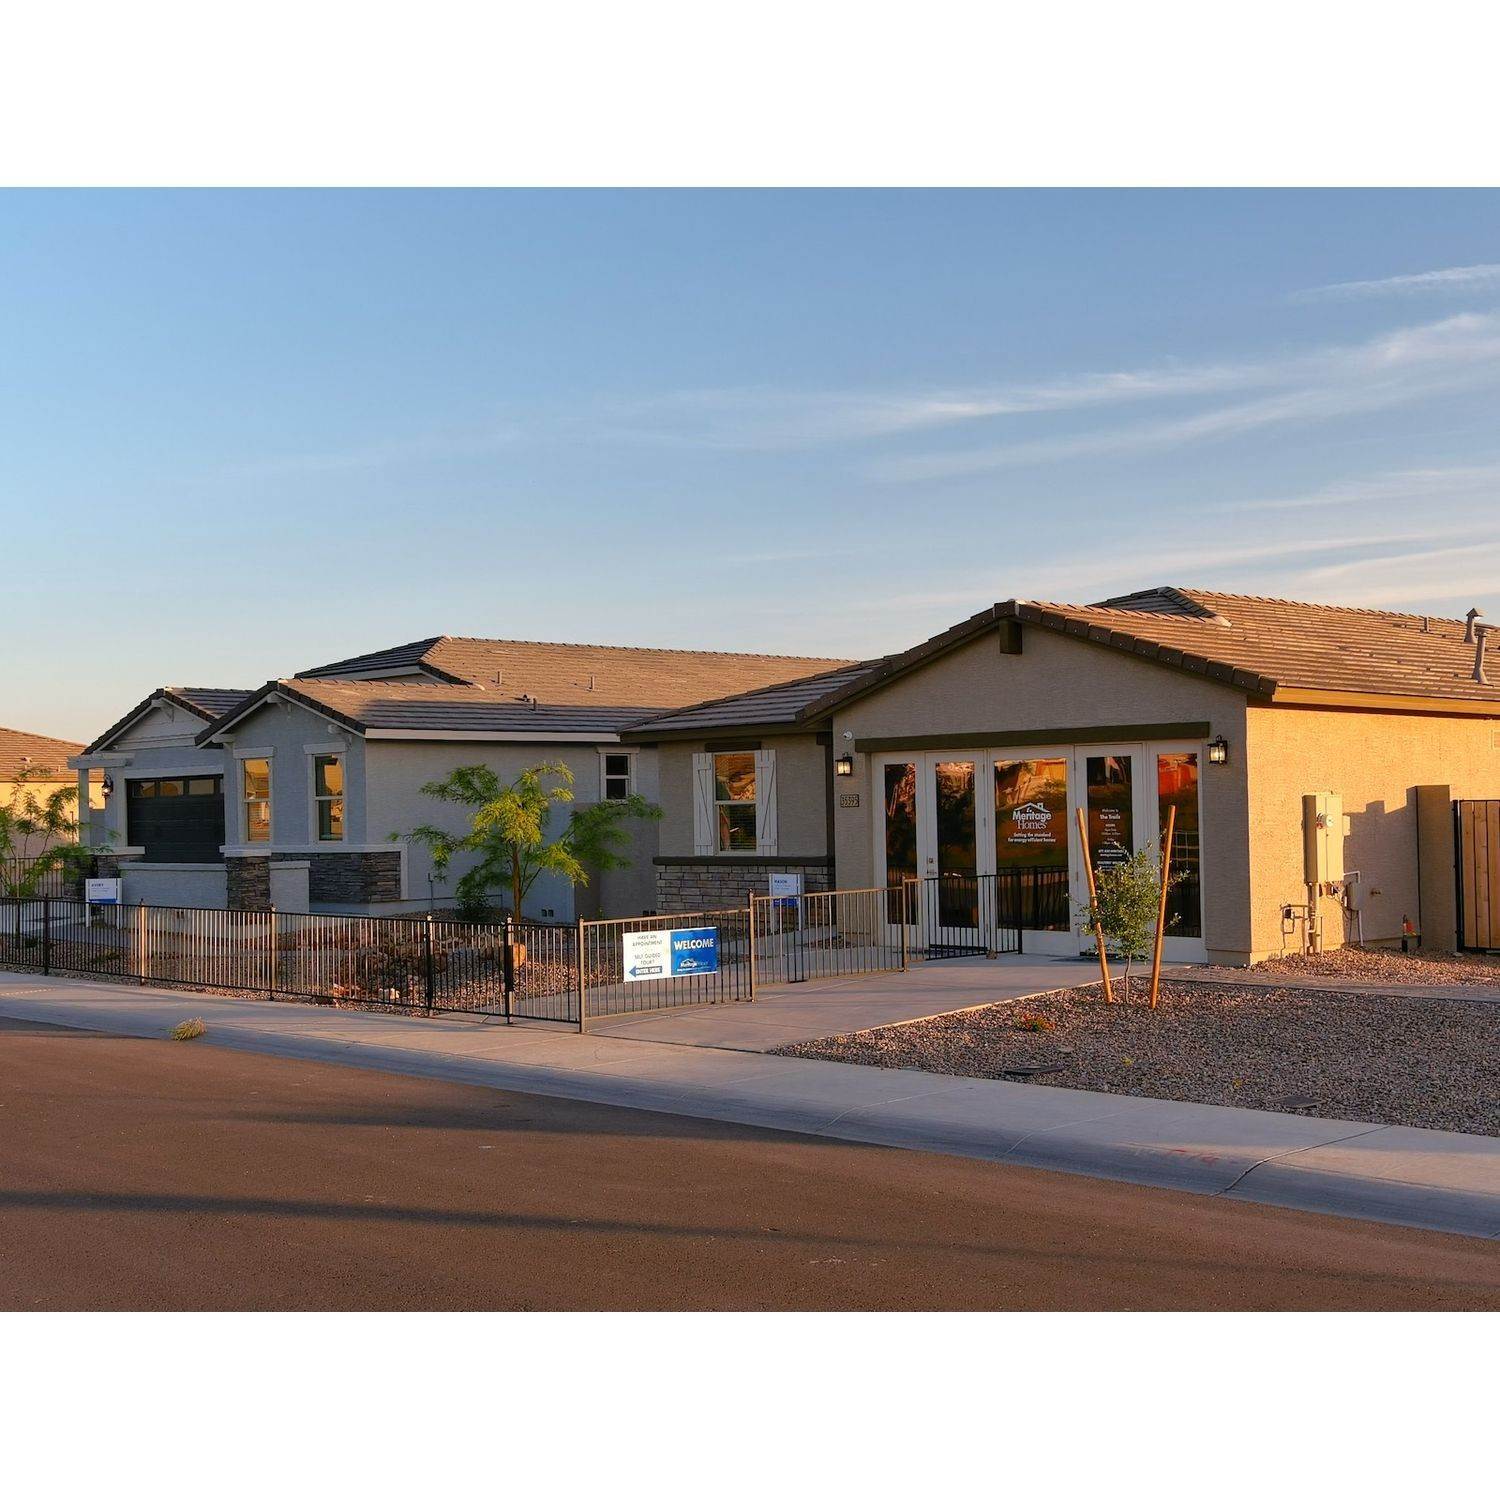 2. The Trails - Estate Series xây dựng tại 35395 W Catalan Street, Maricopa, AZ 85138